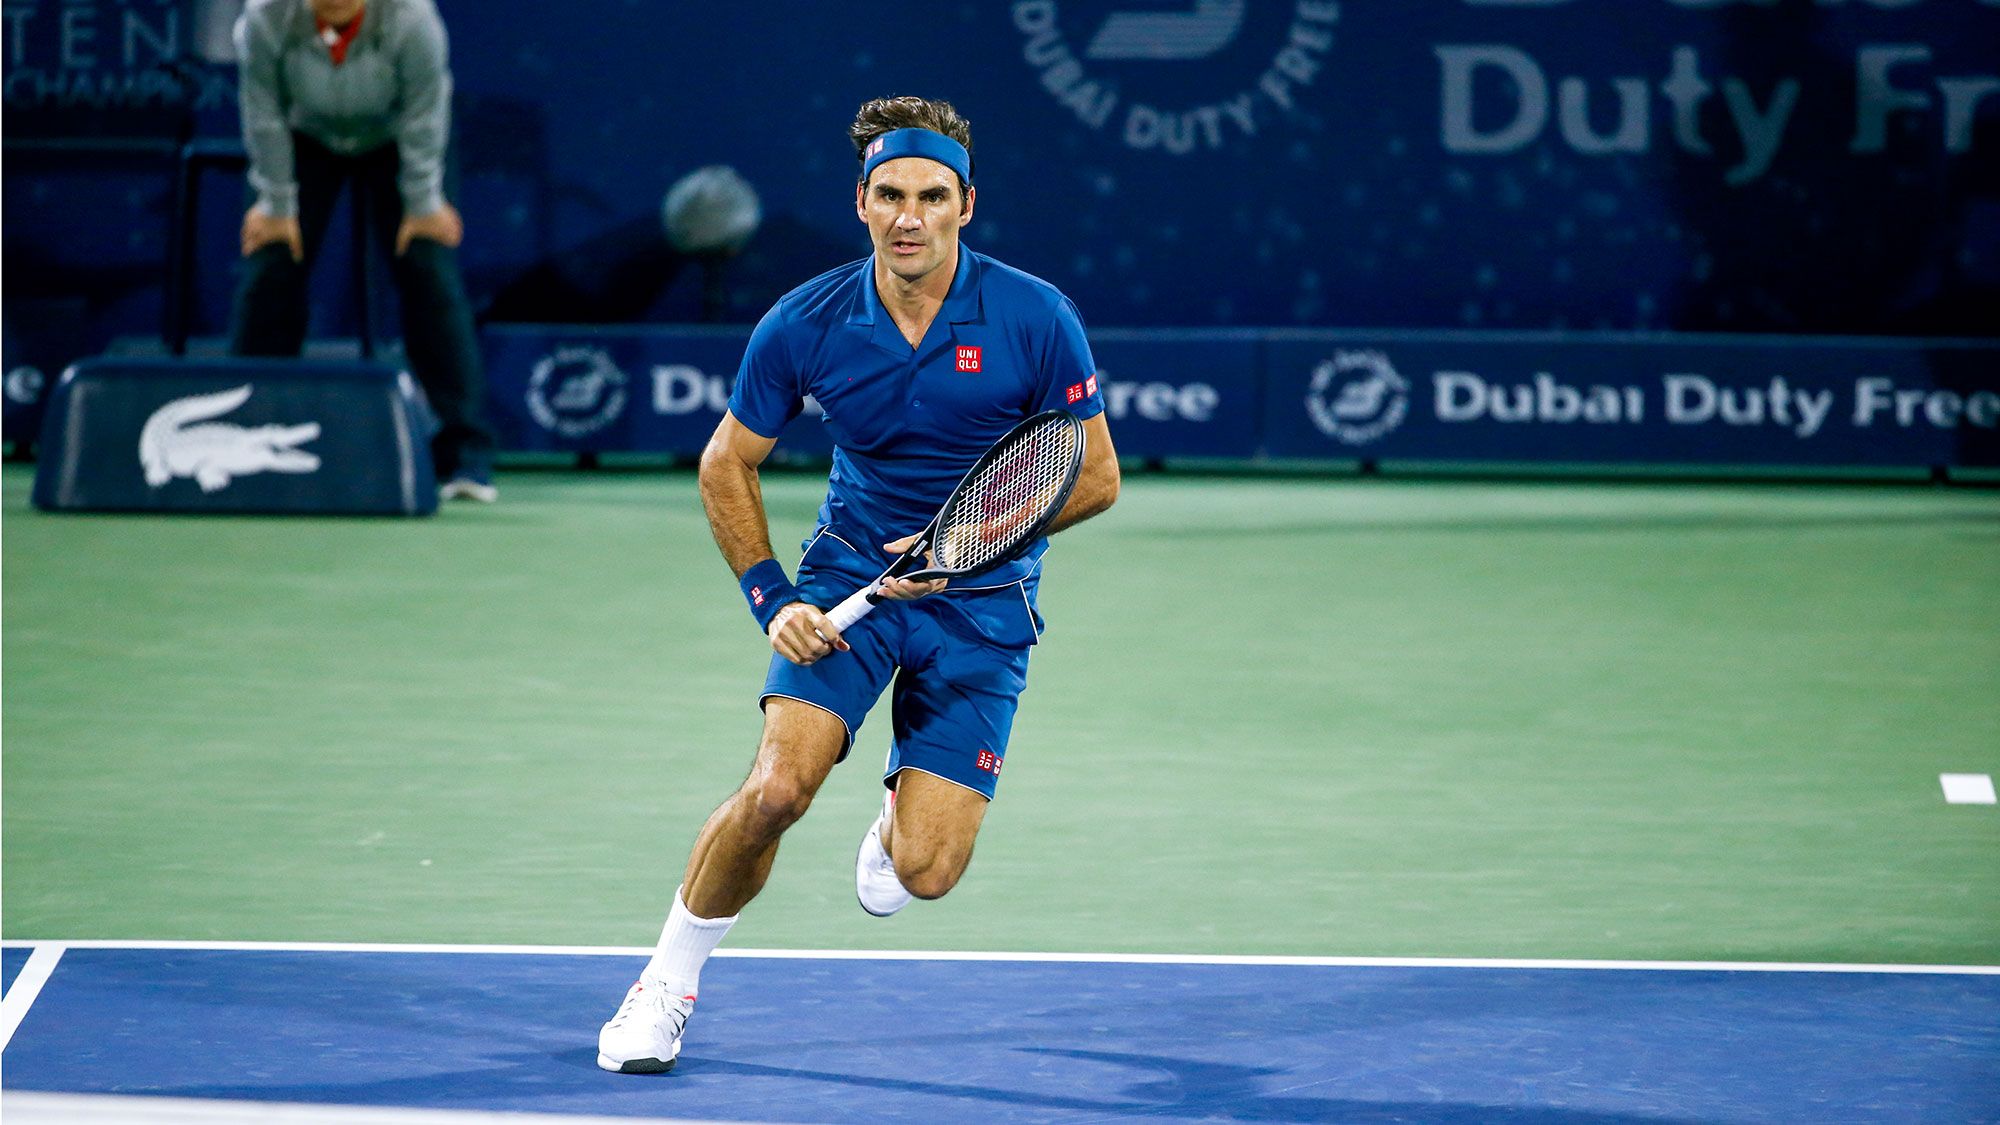 Roger Federer To Play Stefanos Tsitsipas in Dubai Duty Free Tennis Championships Final